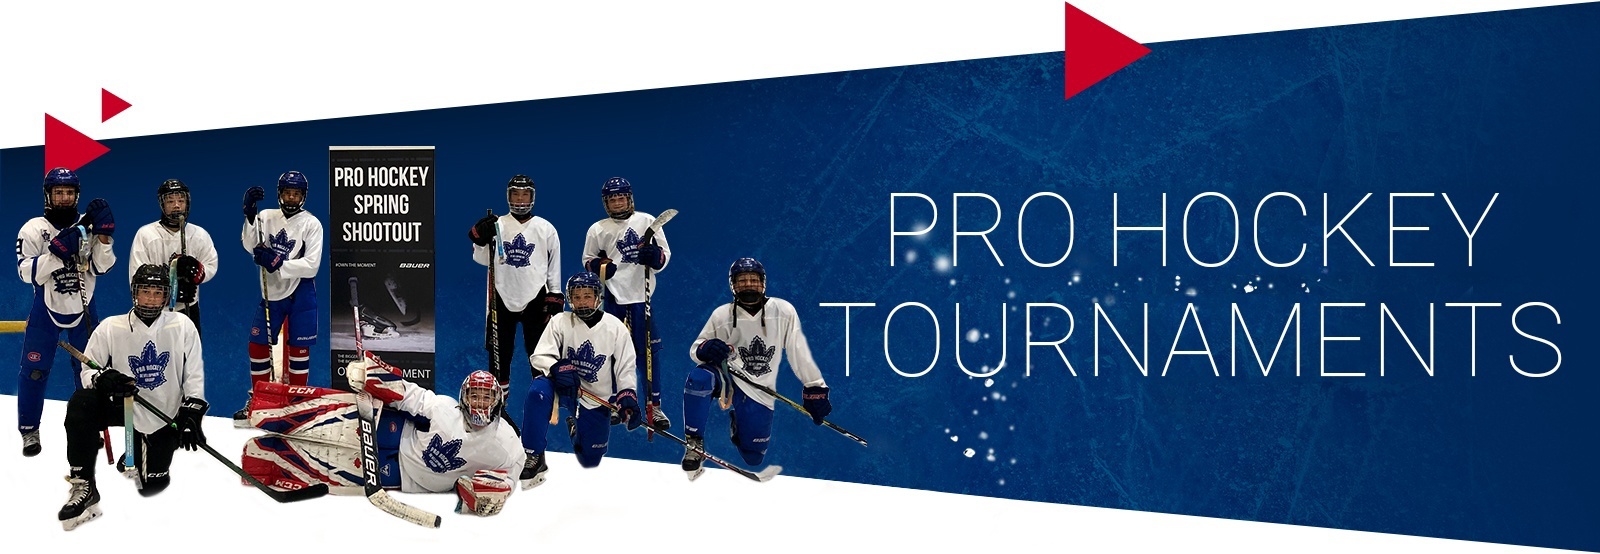 Pro Hockey Tournament USA - Pro Hockey Development Group